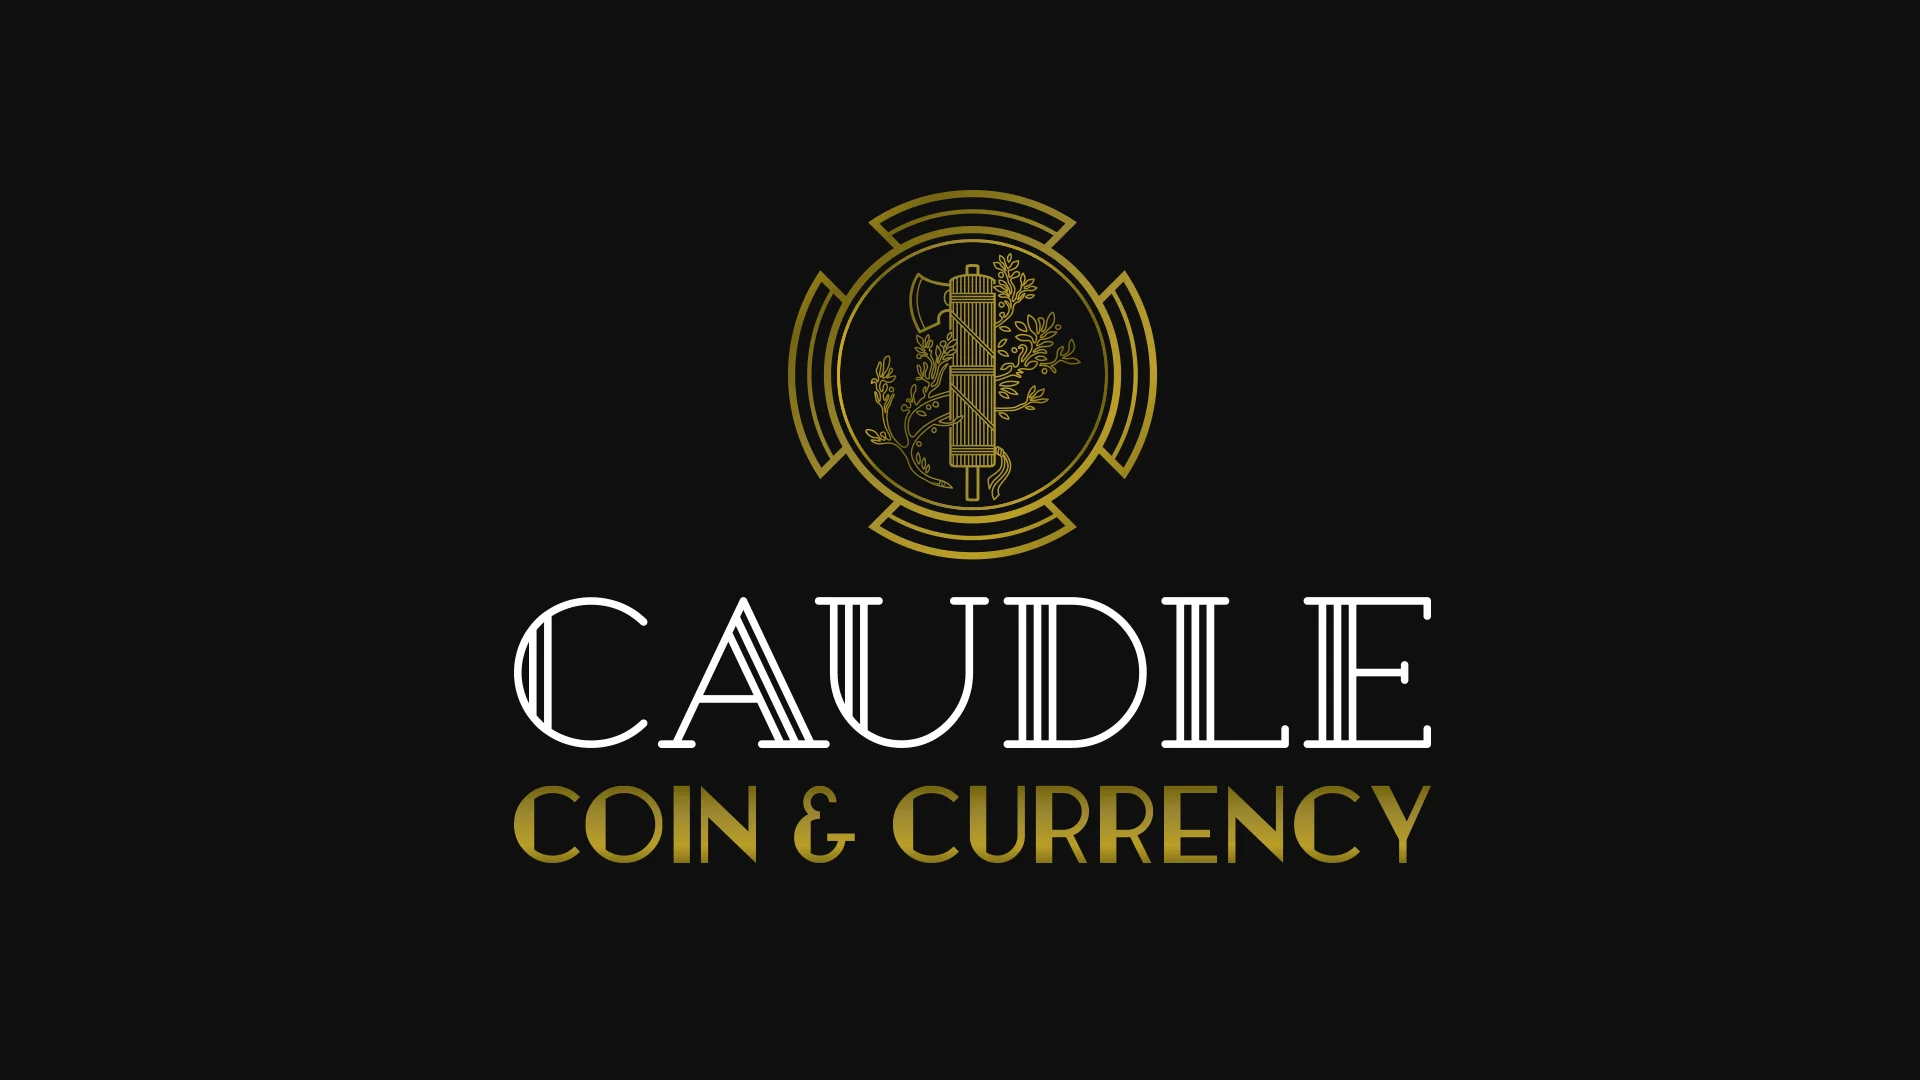 Caudle Coin Logo 1